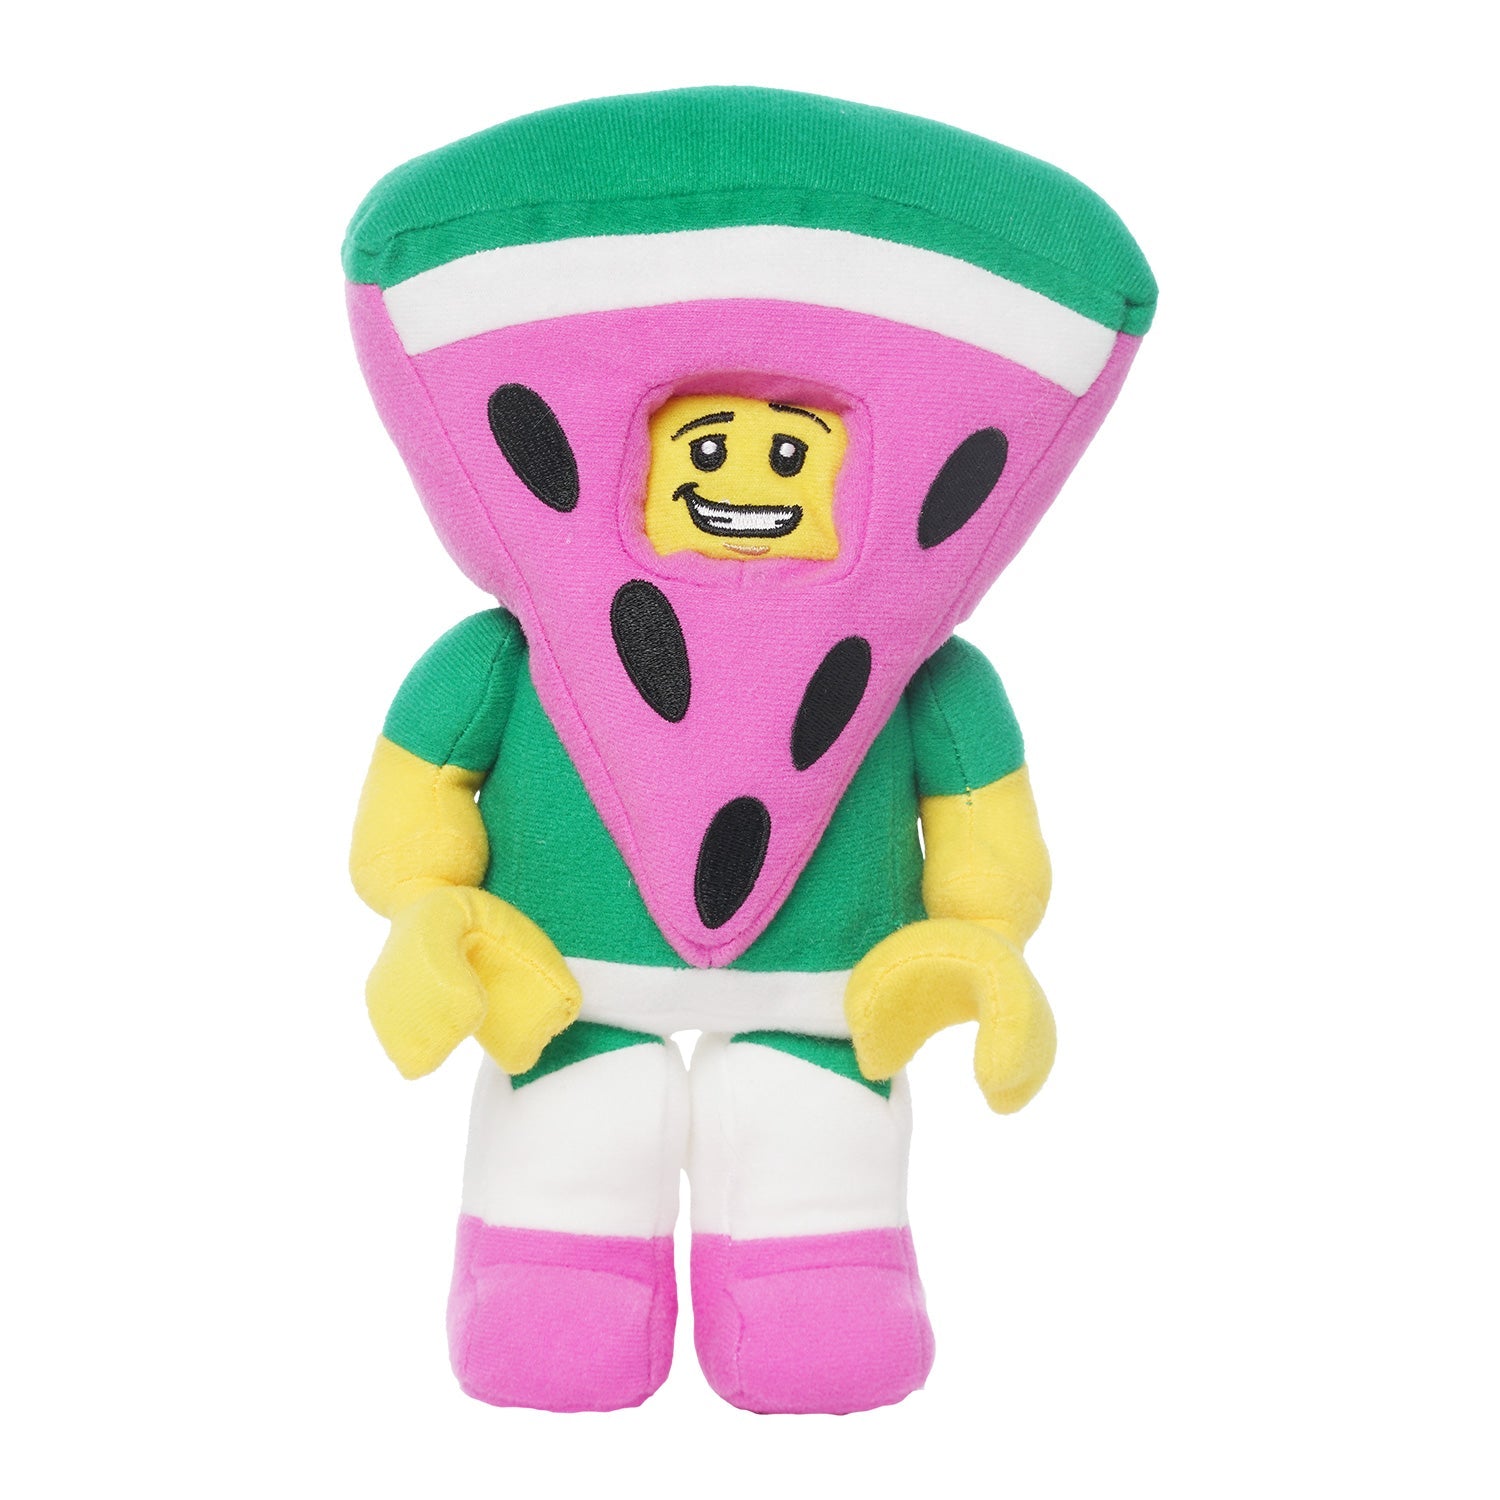 Lego Watermelon Guy Plush Minifigure Small